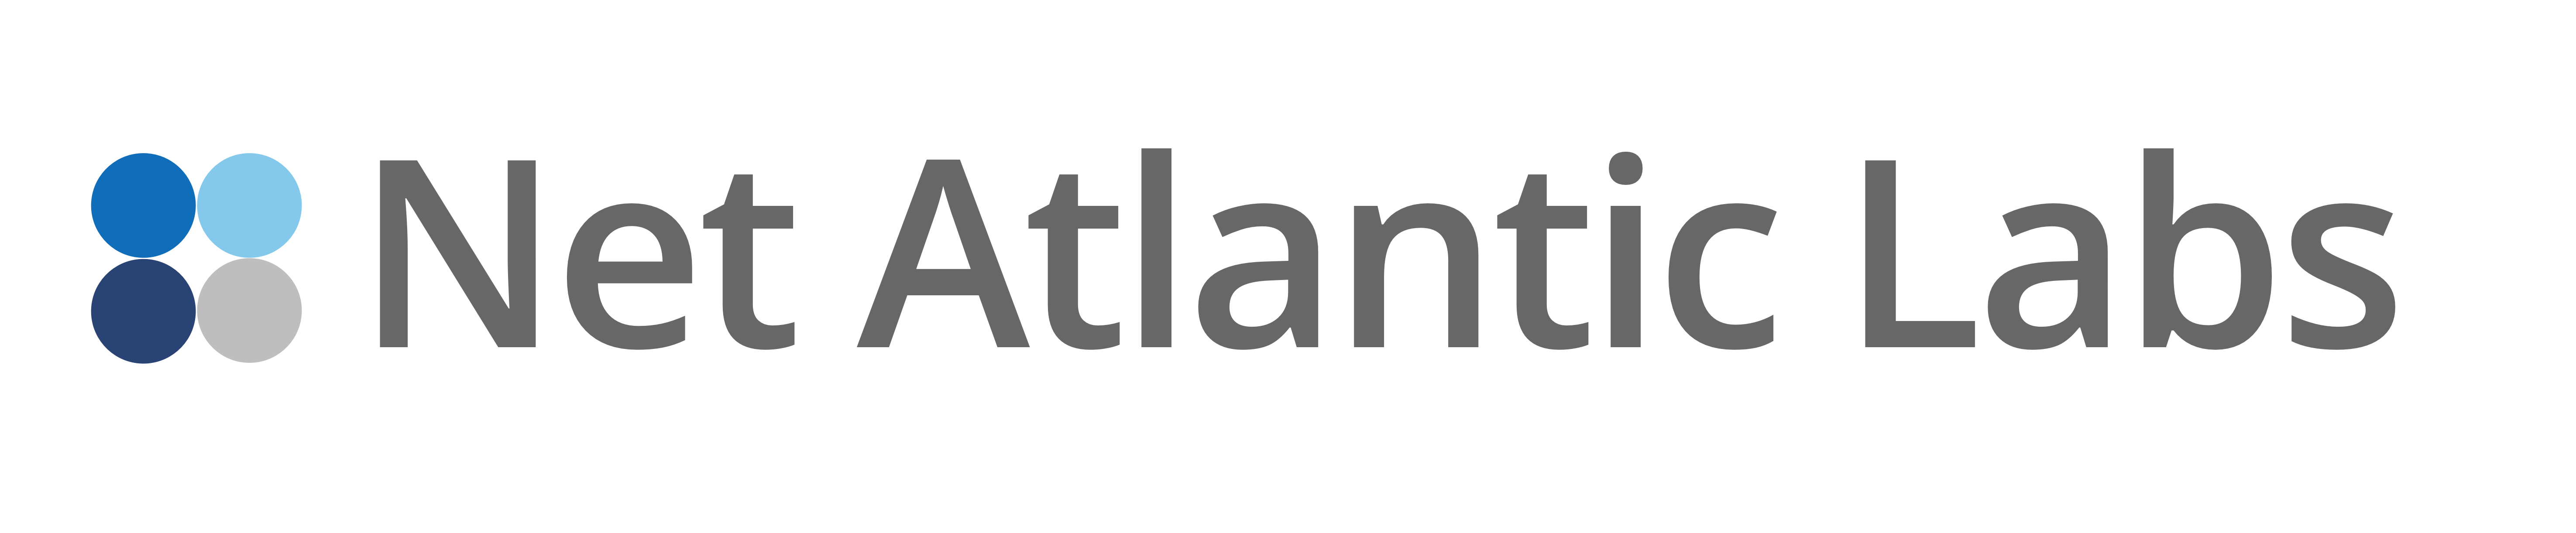 Net Atlantic Labs